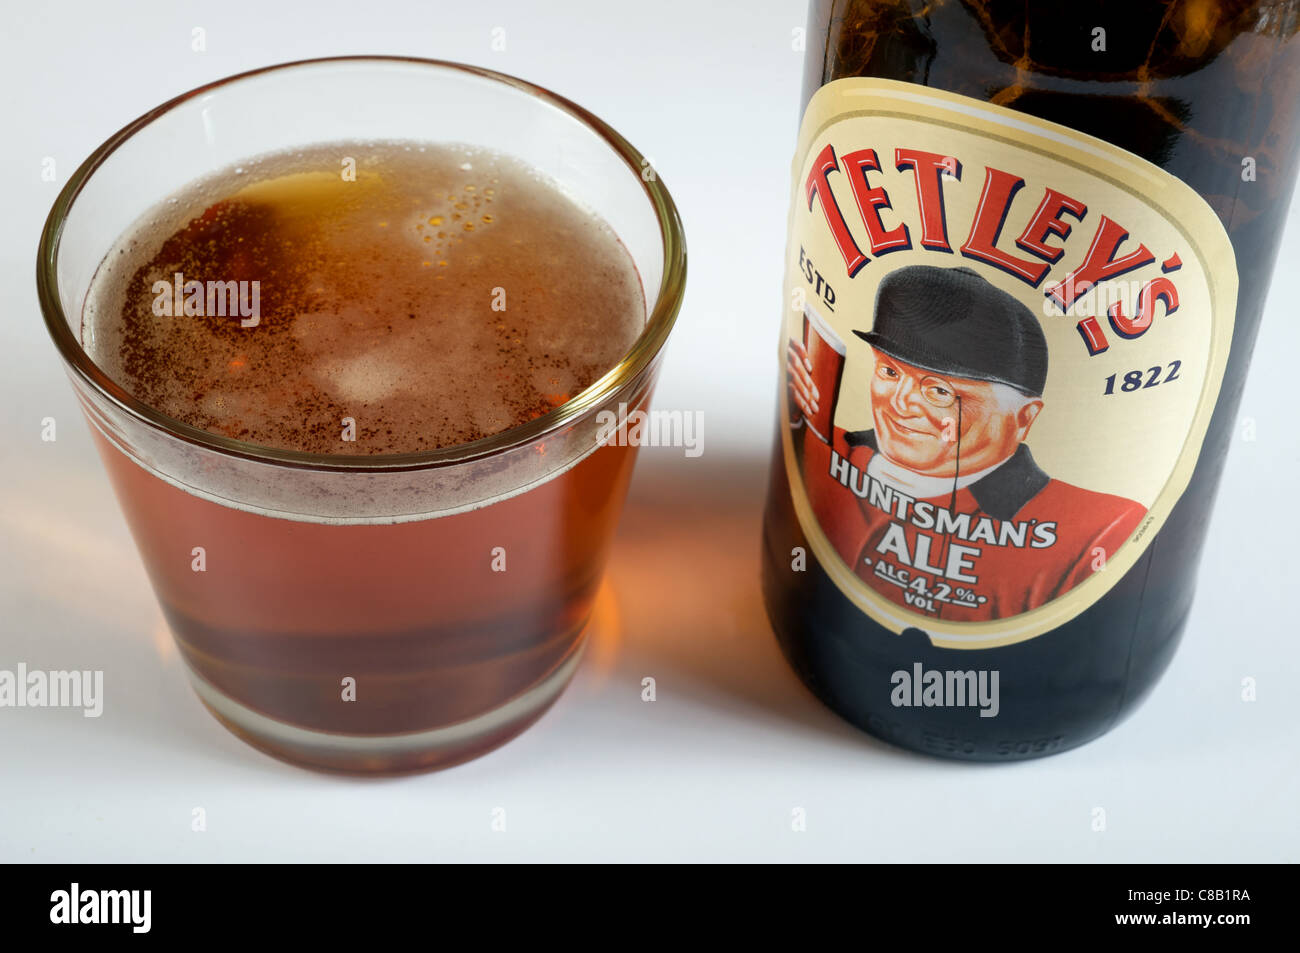 Tetley's Huntsman's ale Stock Photo